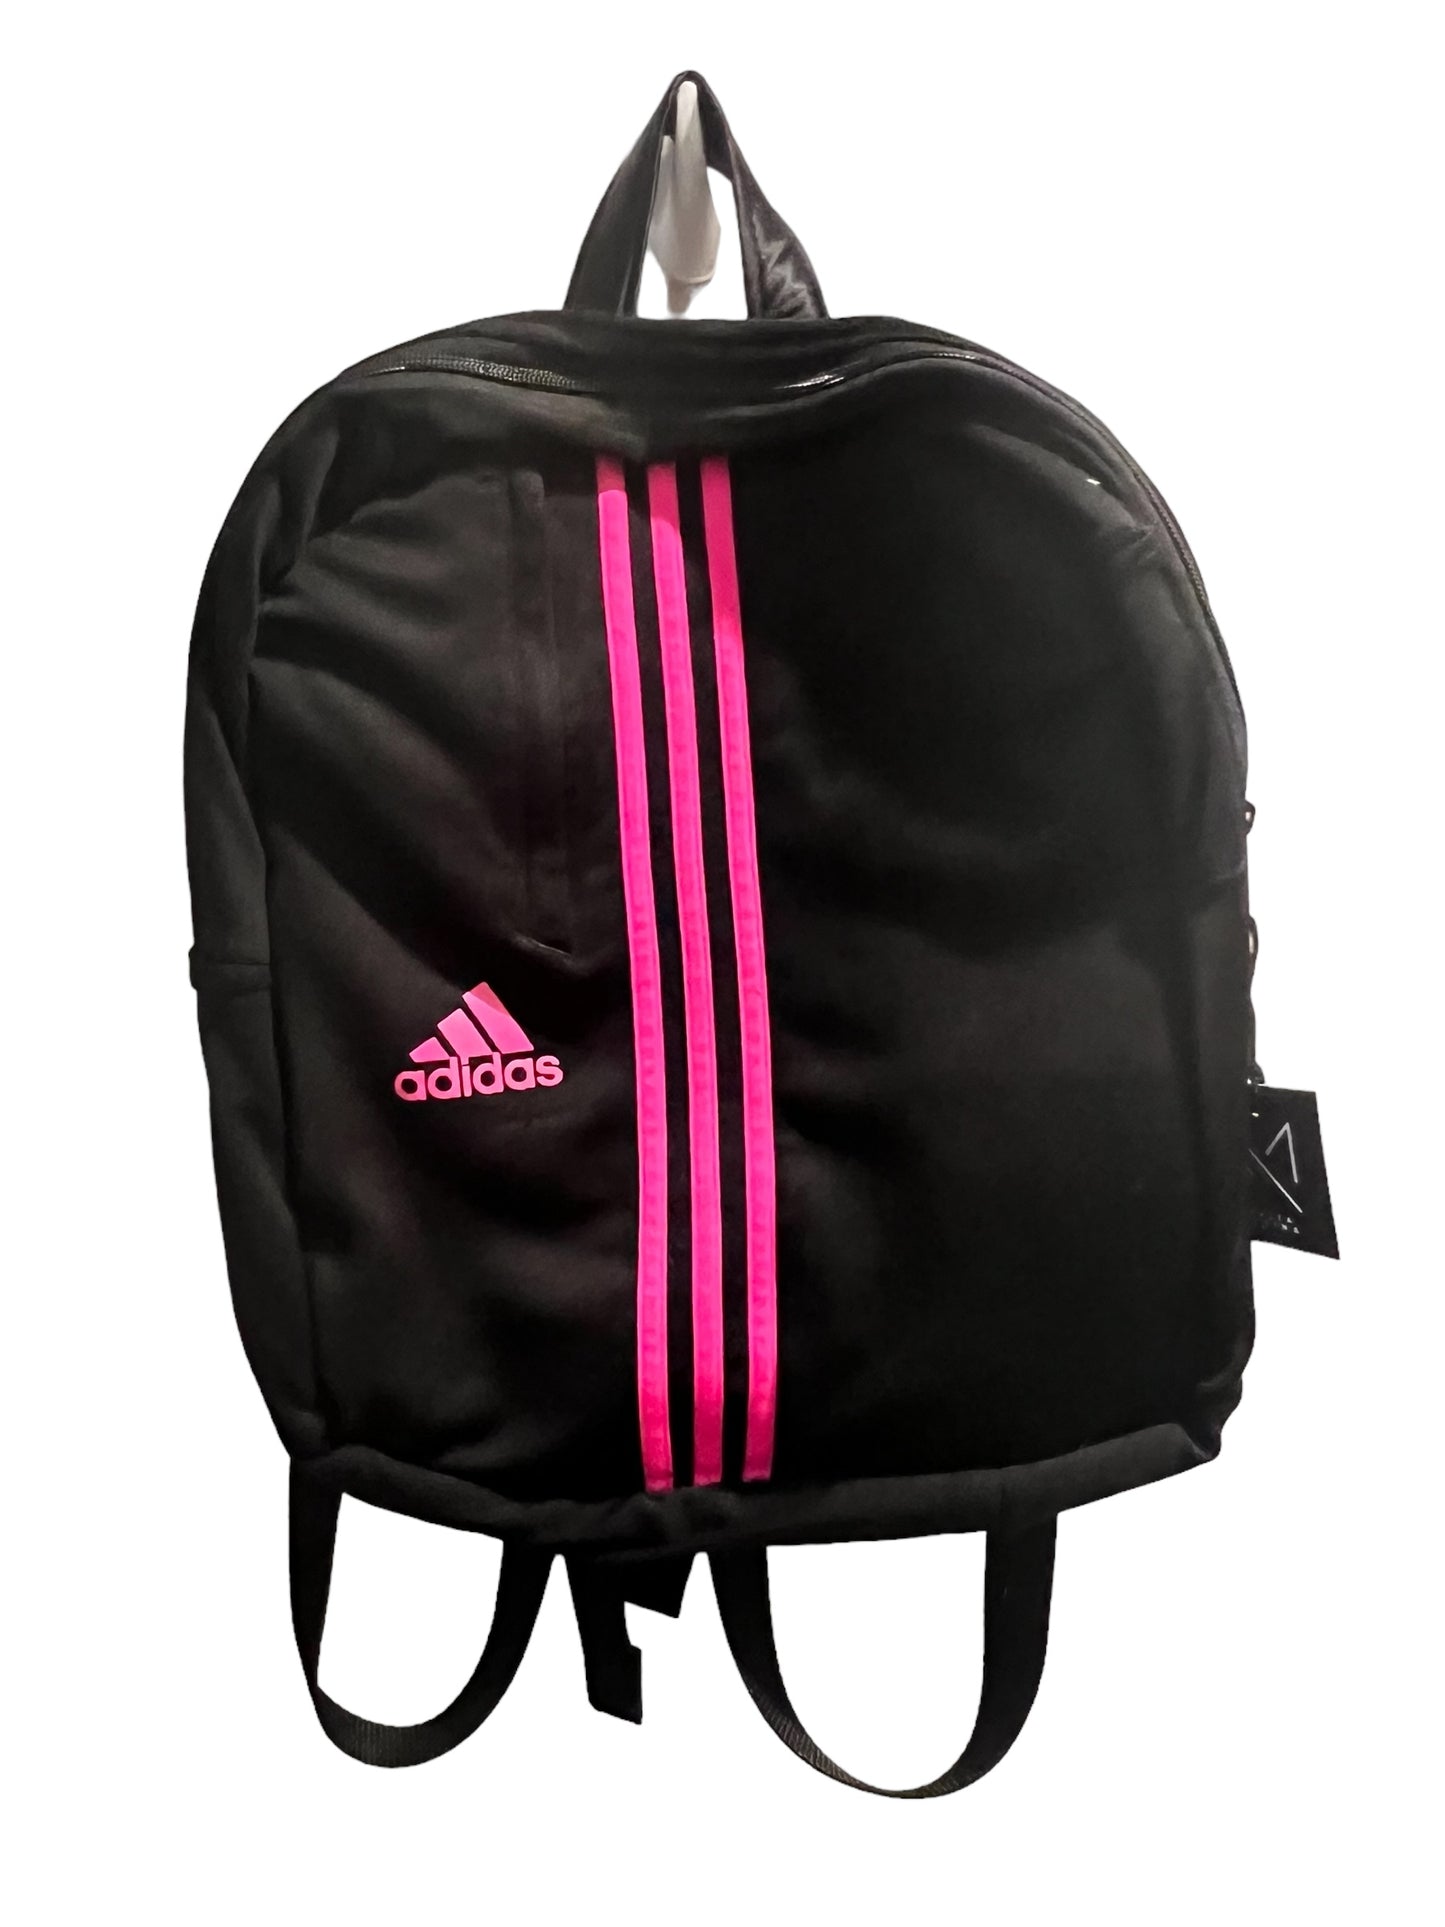 Remixed Adidas Backpack